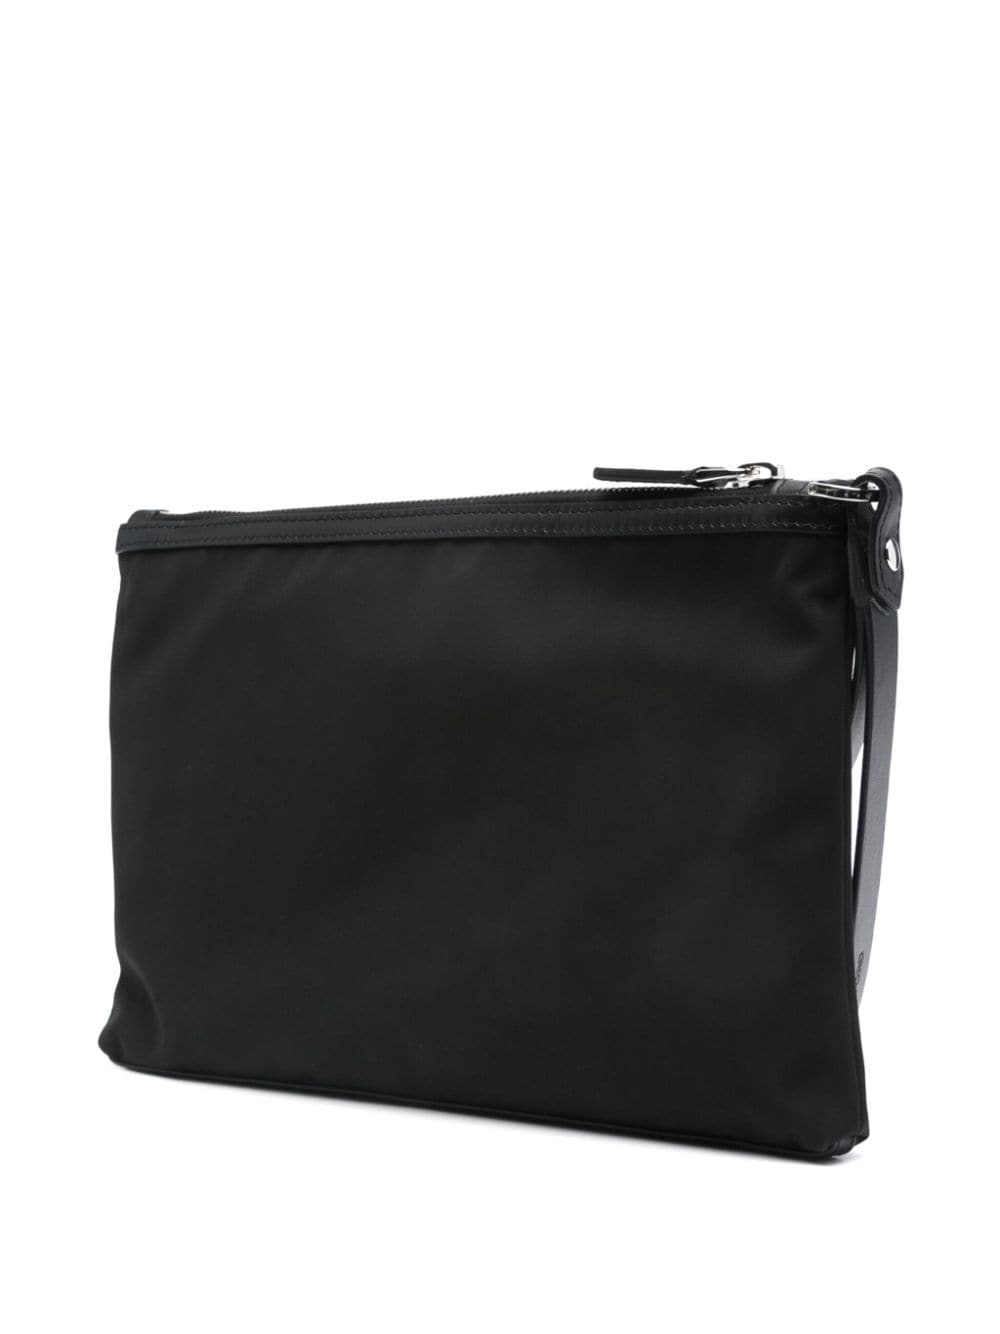 leather clutch bag - 3